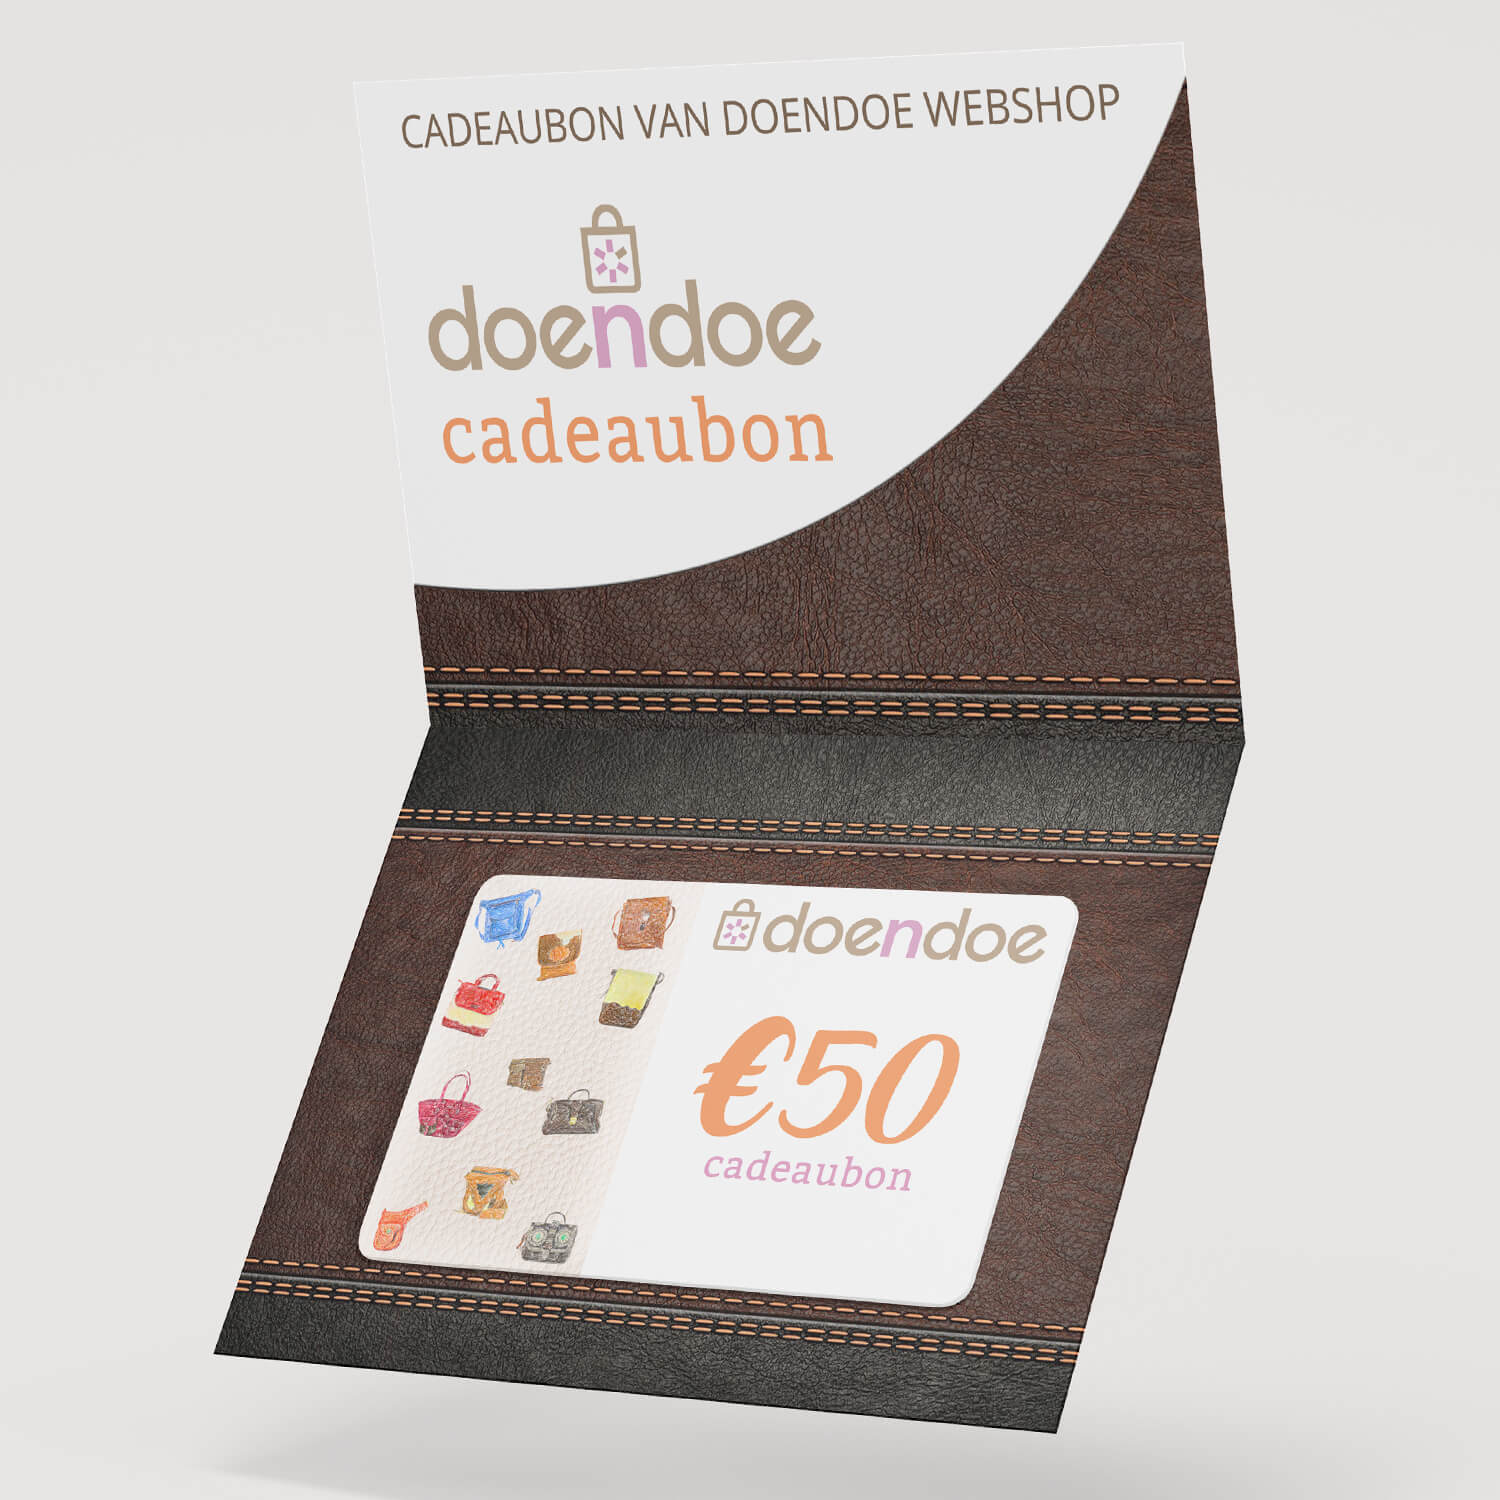 Doenya Doendoe Cadeaubon , boho, Ibiza stijl - Doendoe Webshop